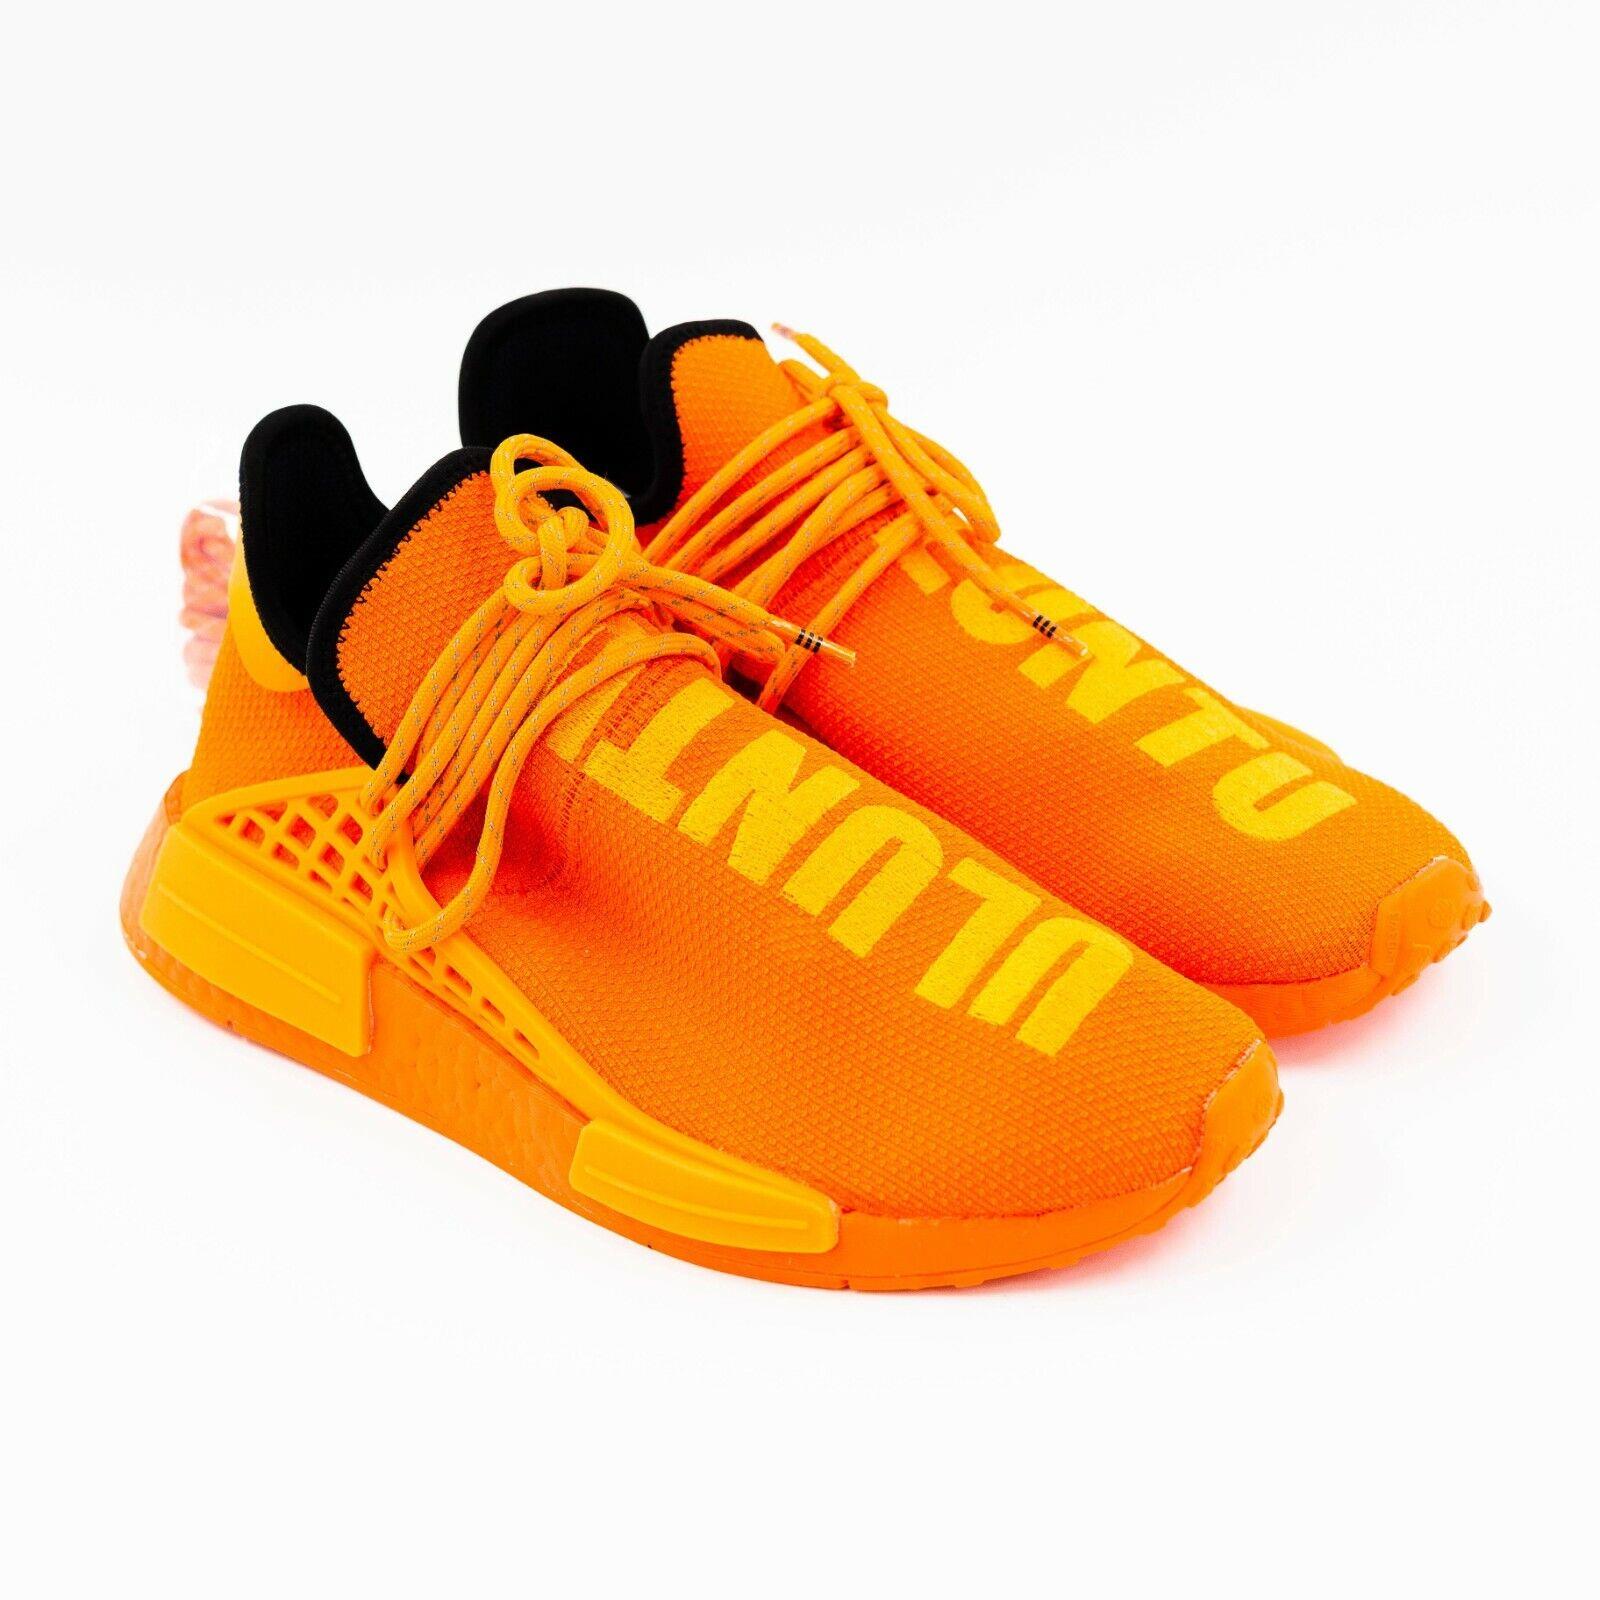 Adidas Mens HU Nmd Pharrell Williams GY0095 Orange Running Shoes Lace Up Size 9